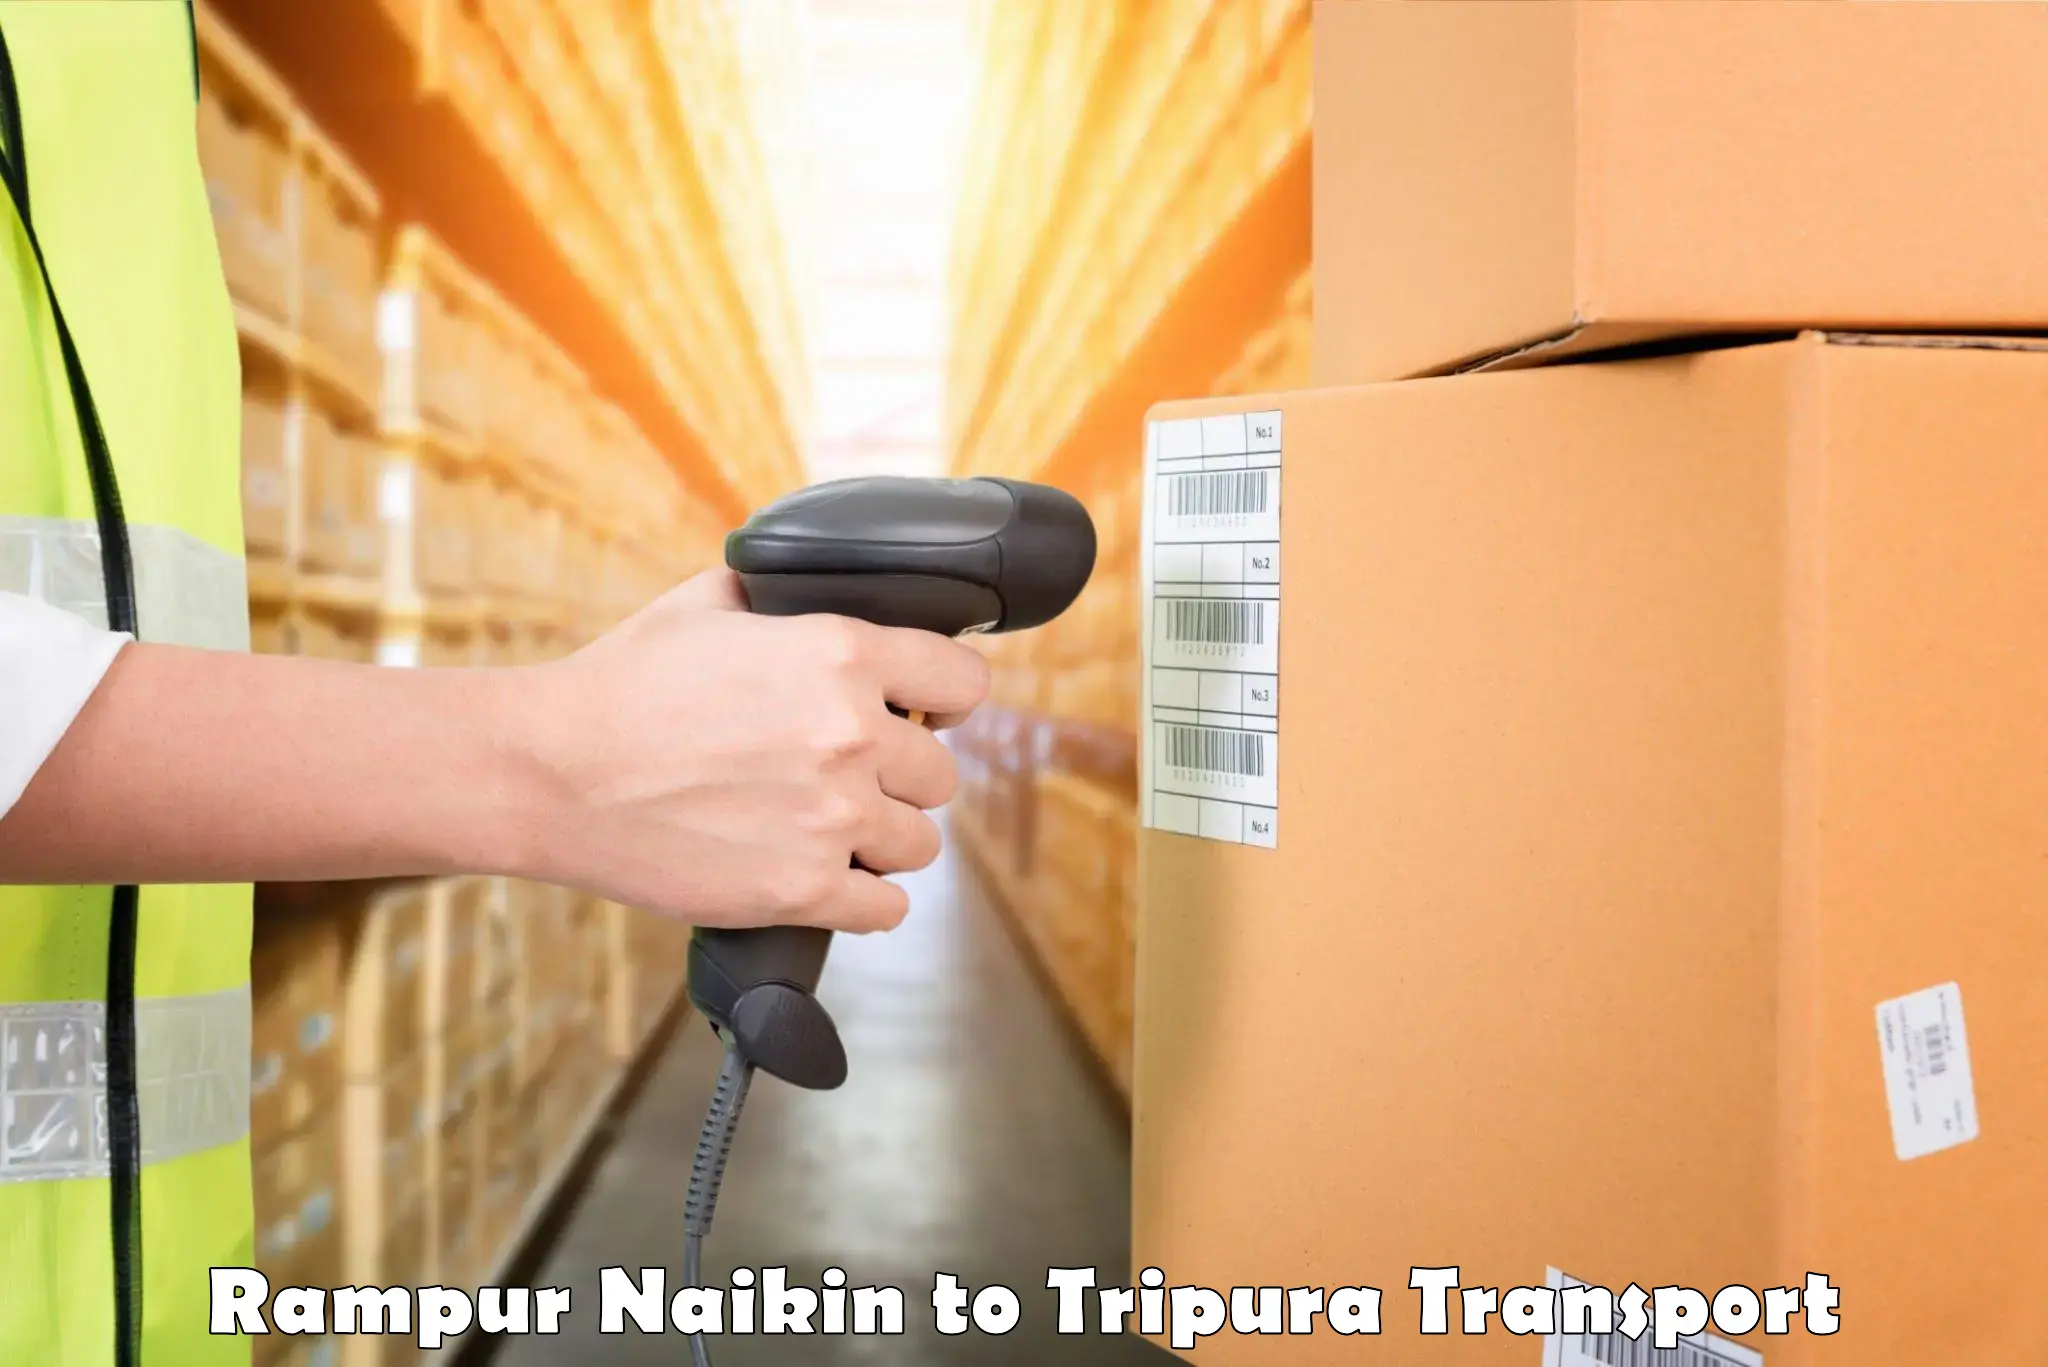 Truck transport companies in India Rampur Naikin to Agartala